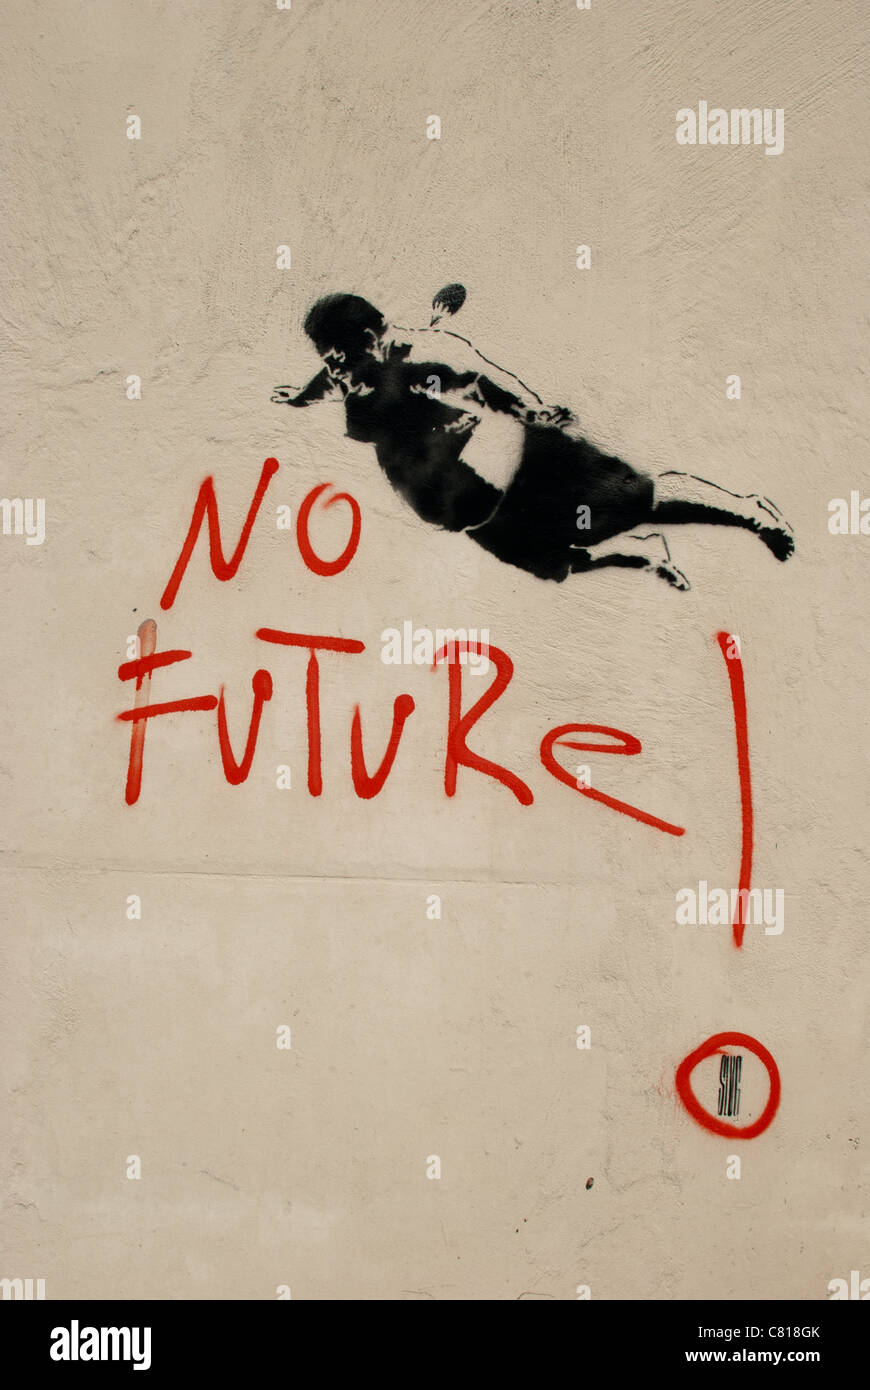 Graffiti saying : no Future. Fat man skydiving with a miniature parachute. Stock Photo